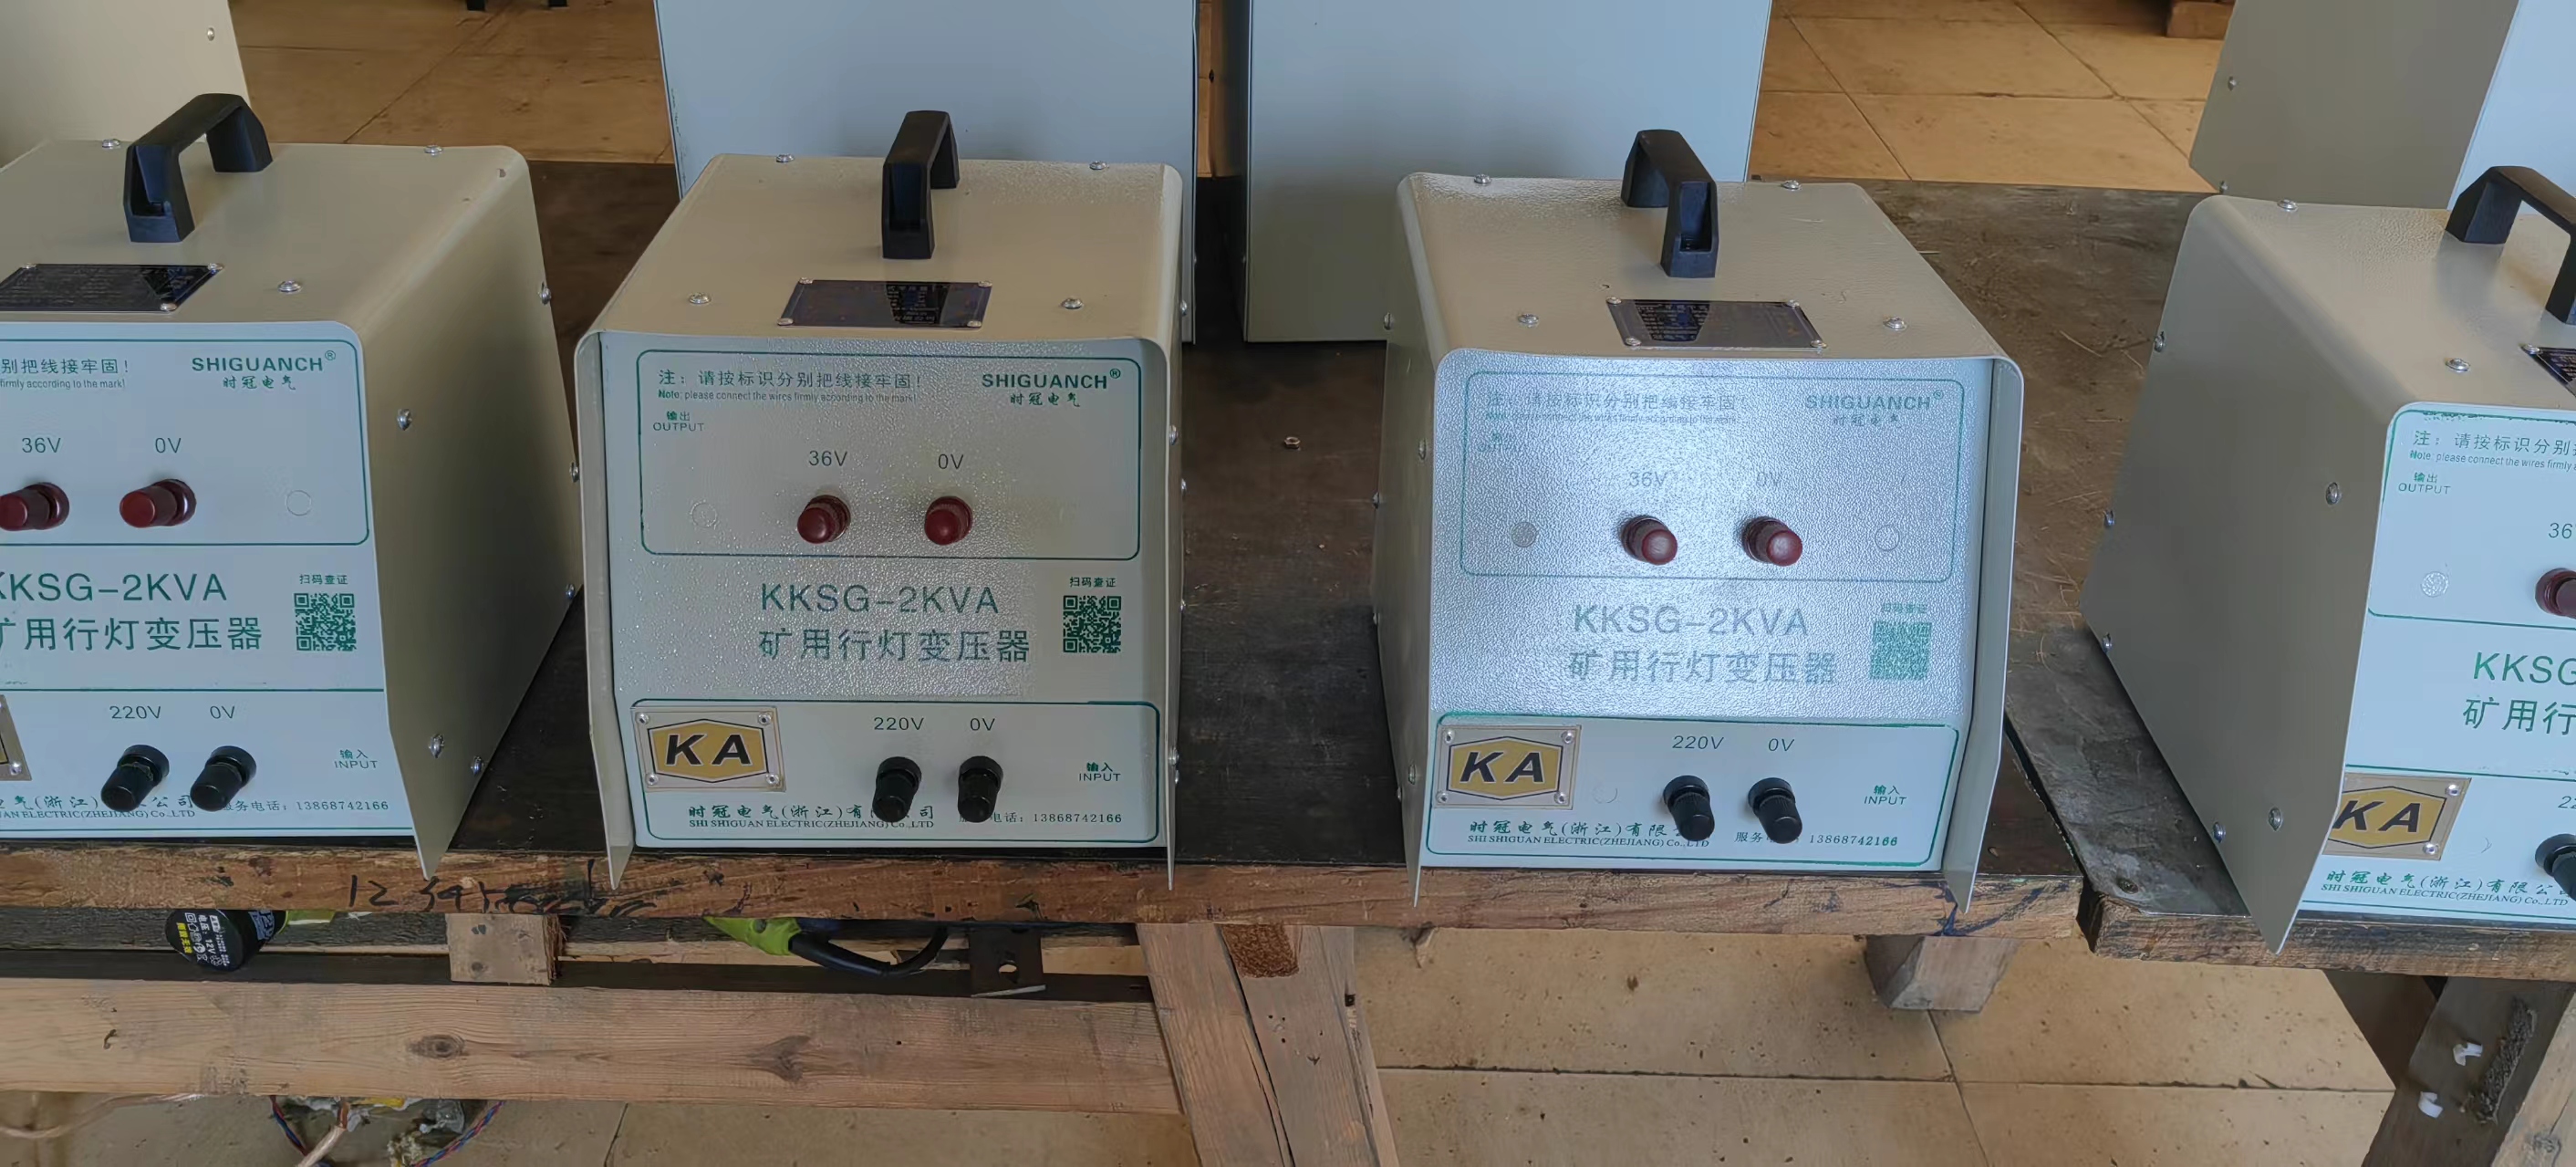 KKSG-2kva矿用变压器KKSG-4kva矿用照明变压器kksg-5kva变压器带矿安